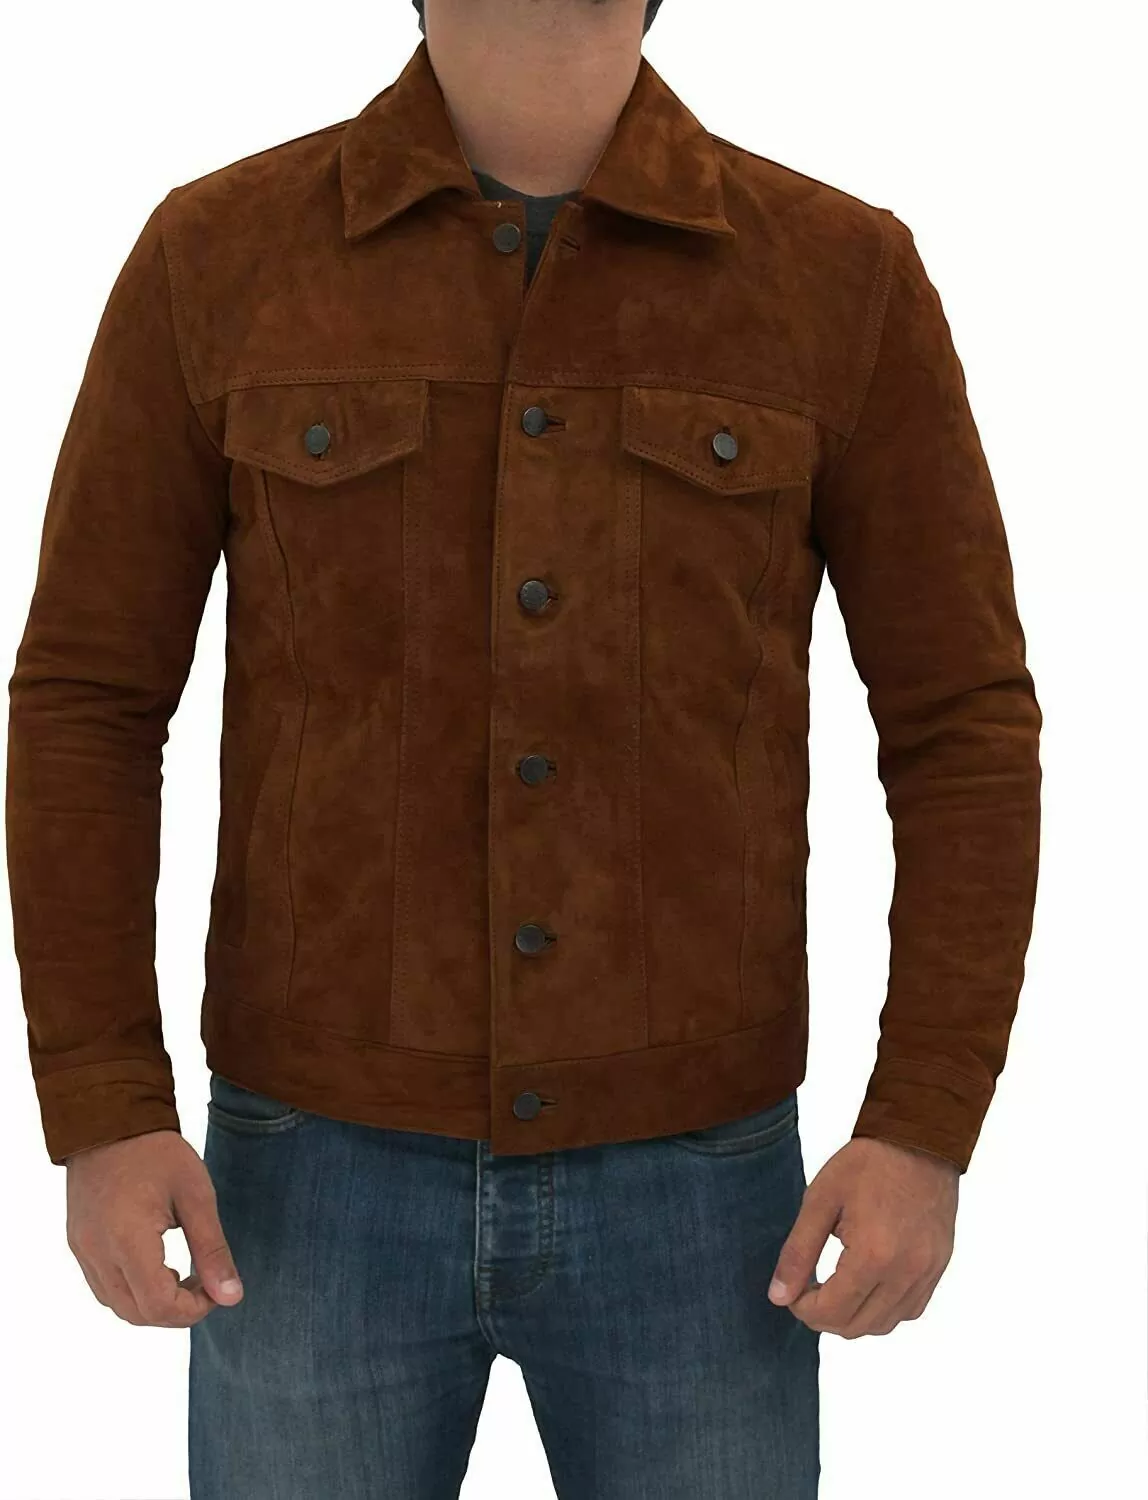 Men’s Logan Cowboy Style Brown Suede Leather Jacket